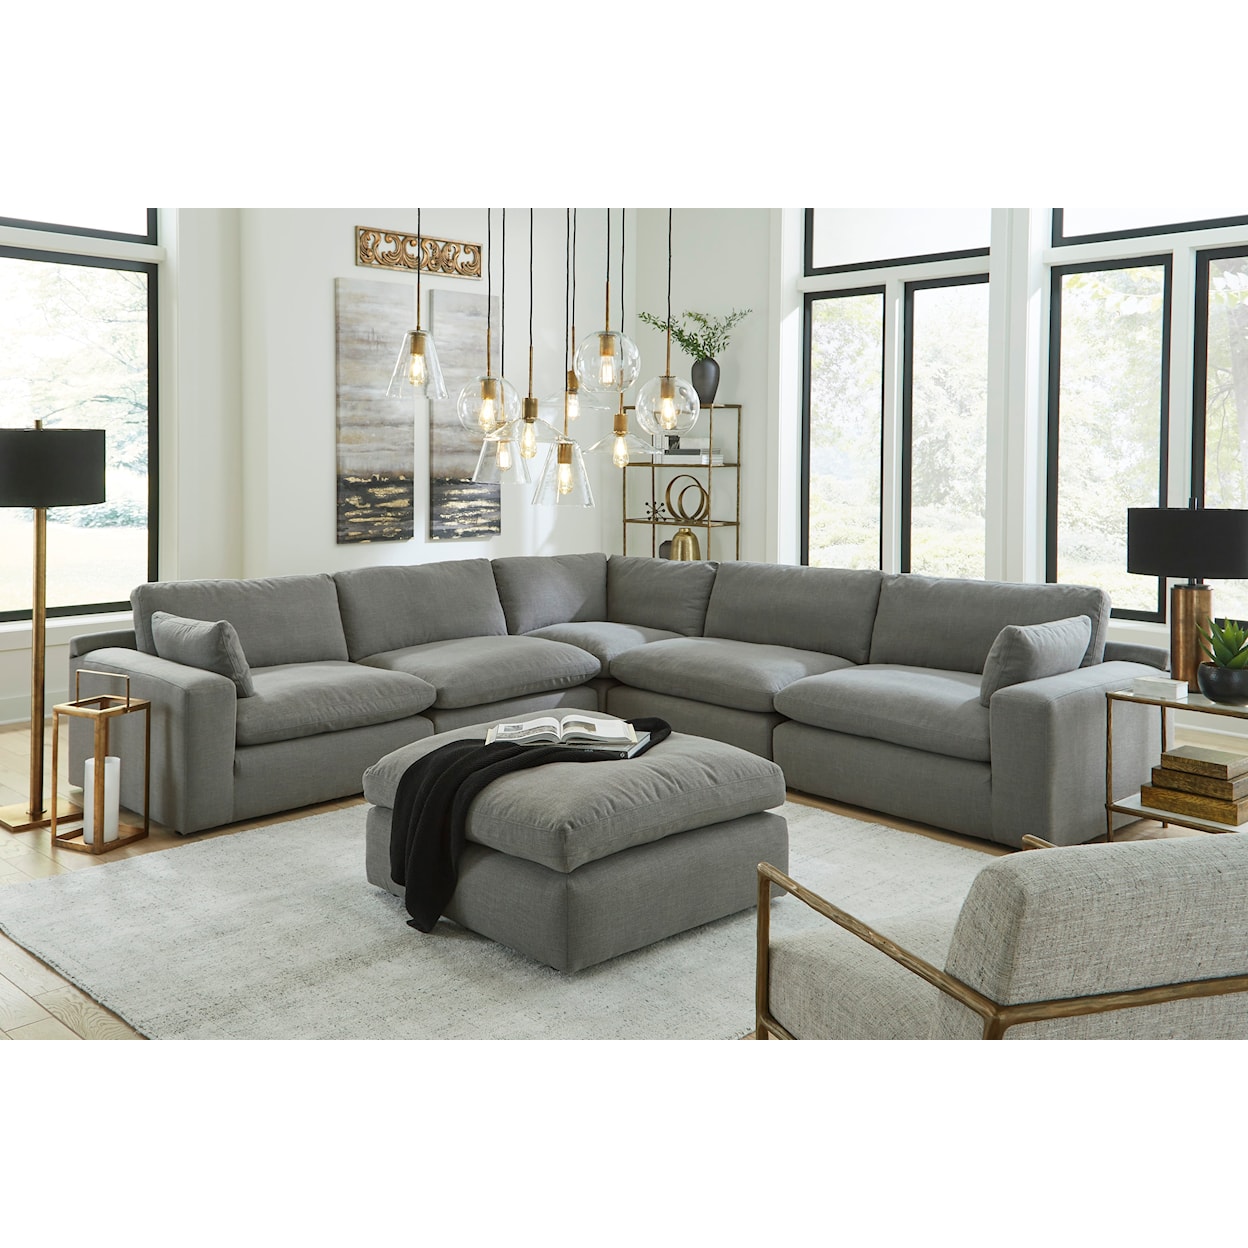 Benchcraft Elyza Living Room Set